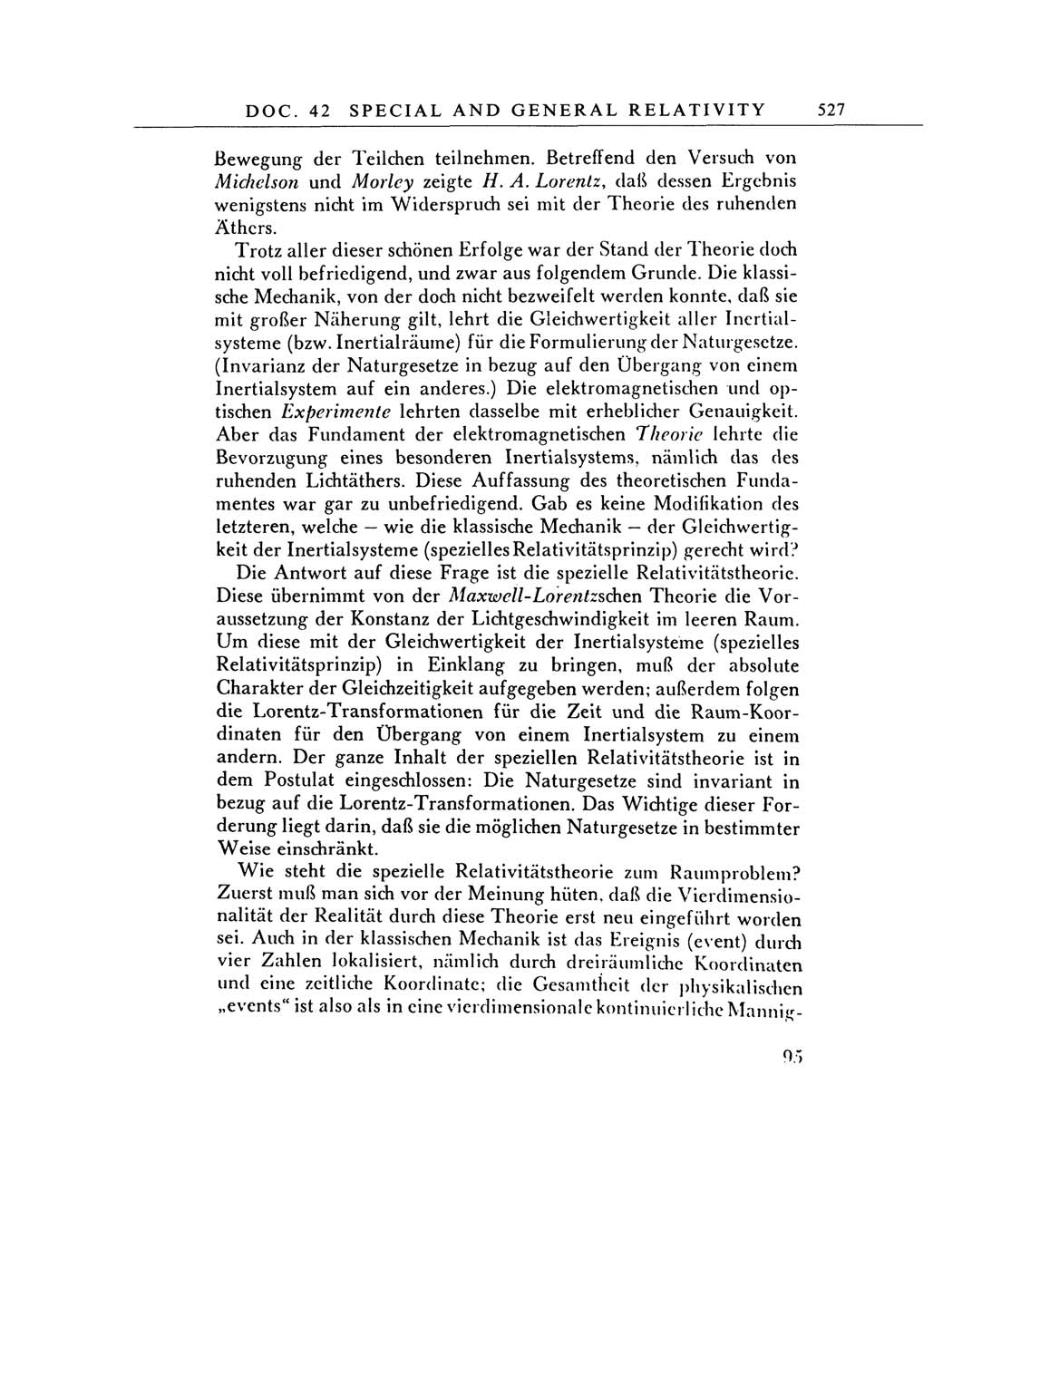 Volume 6: The Berlin Years: Writings, 1914-1917 page 527